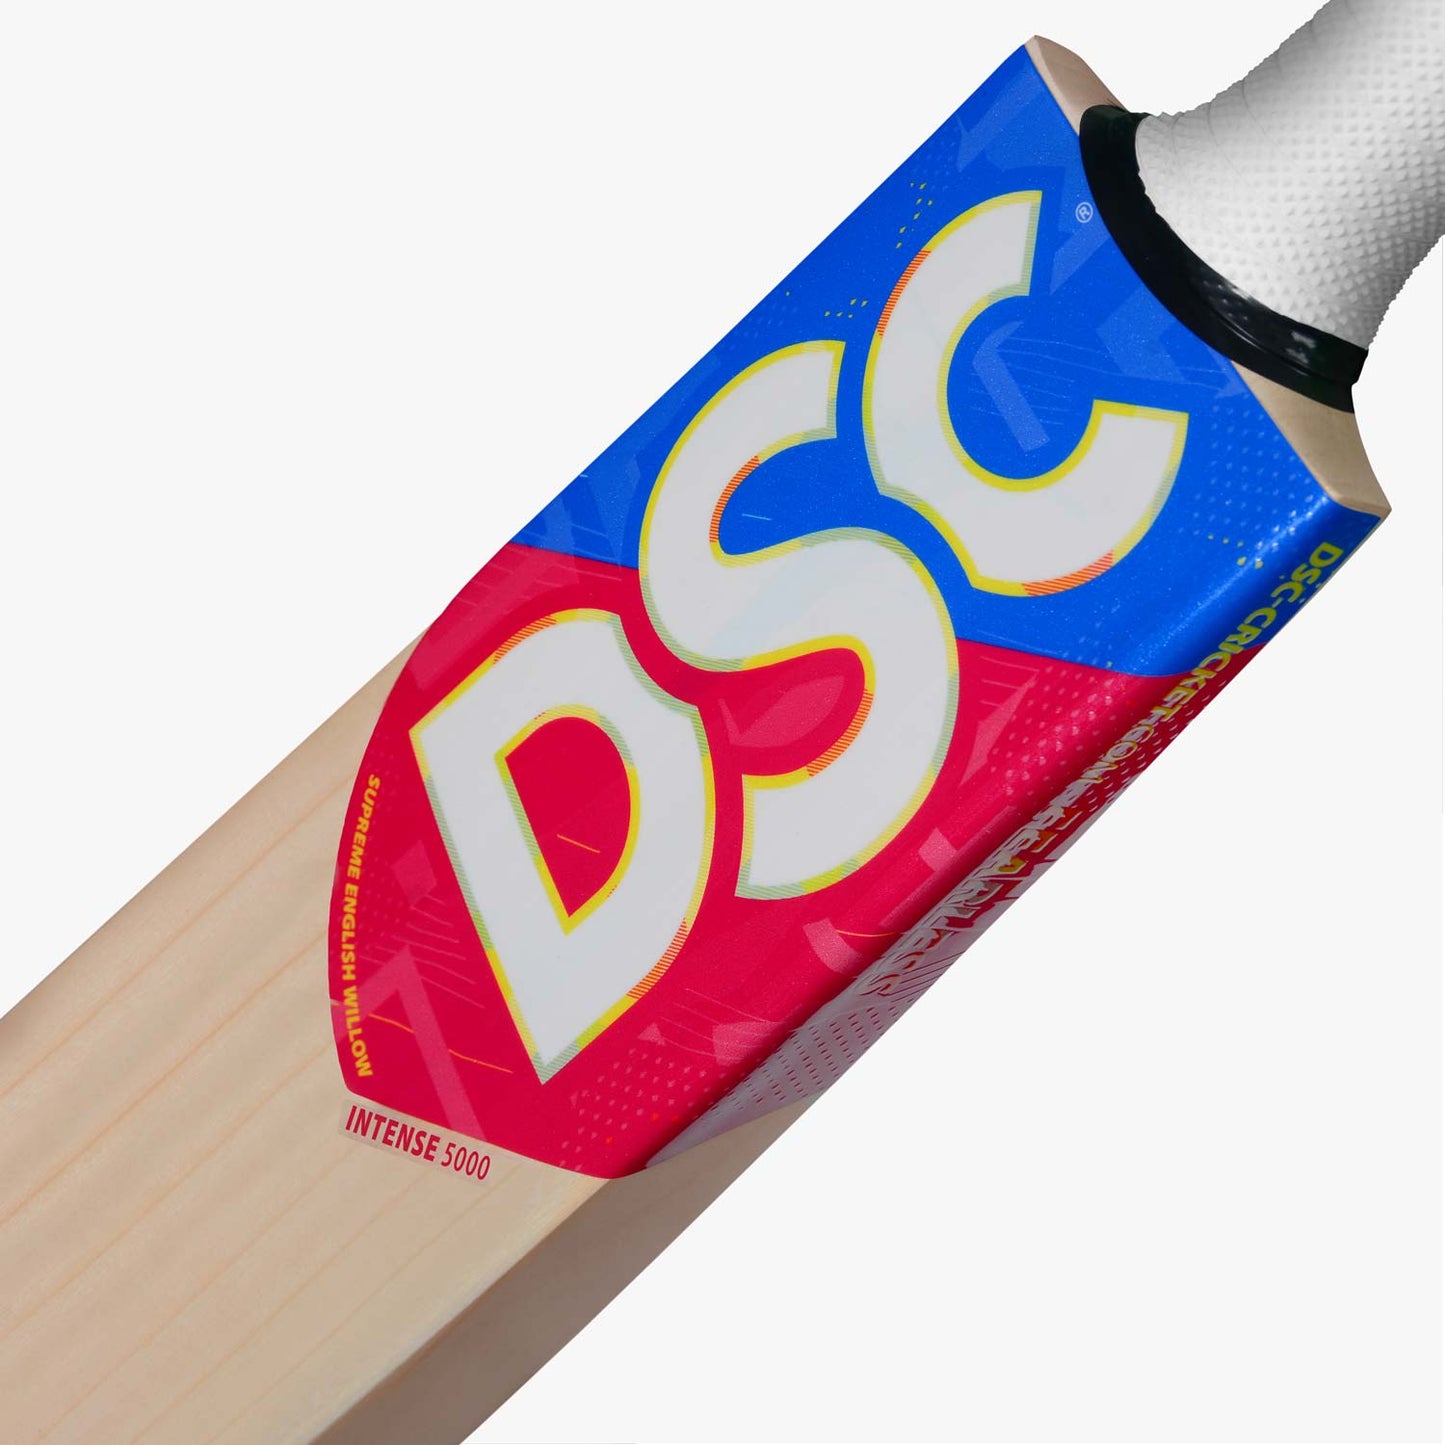 DSC Intense 5000 Cricket Bat 2023